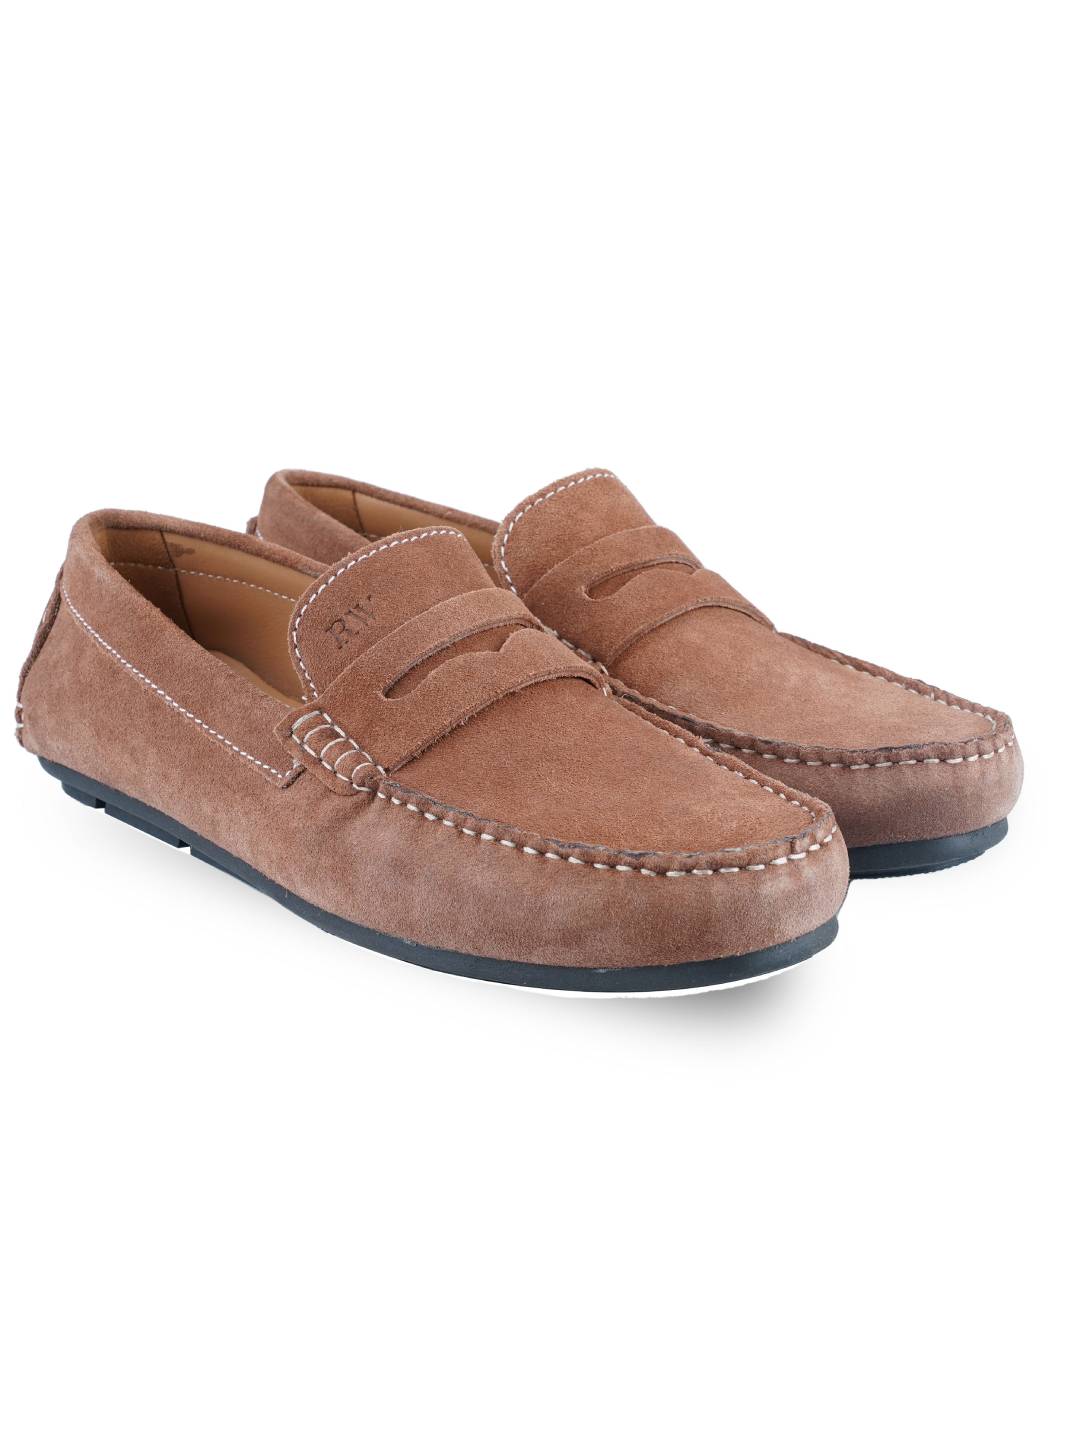 Light Brown Penny Loafer Moccasins Leather Shoes leather shoes for men |  Rapawalk